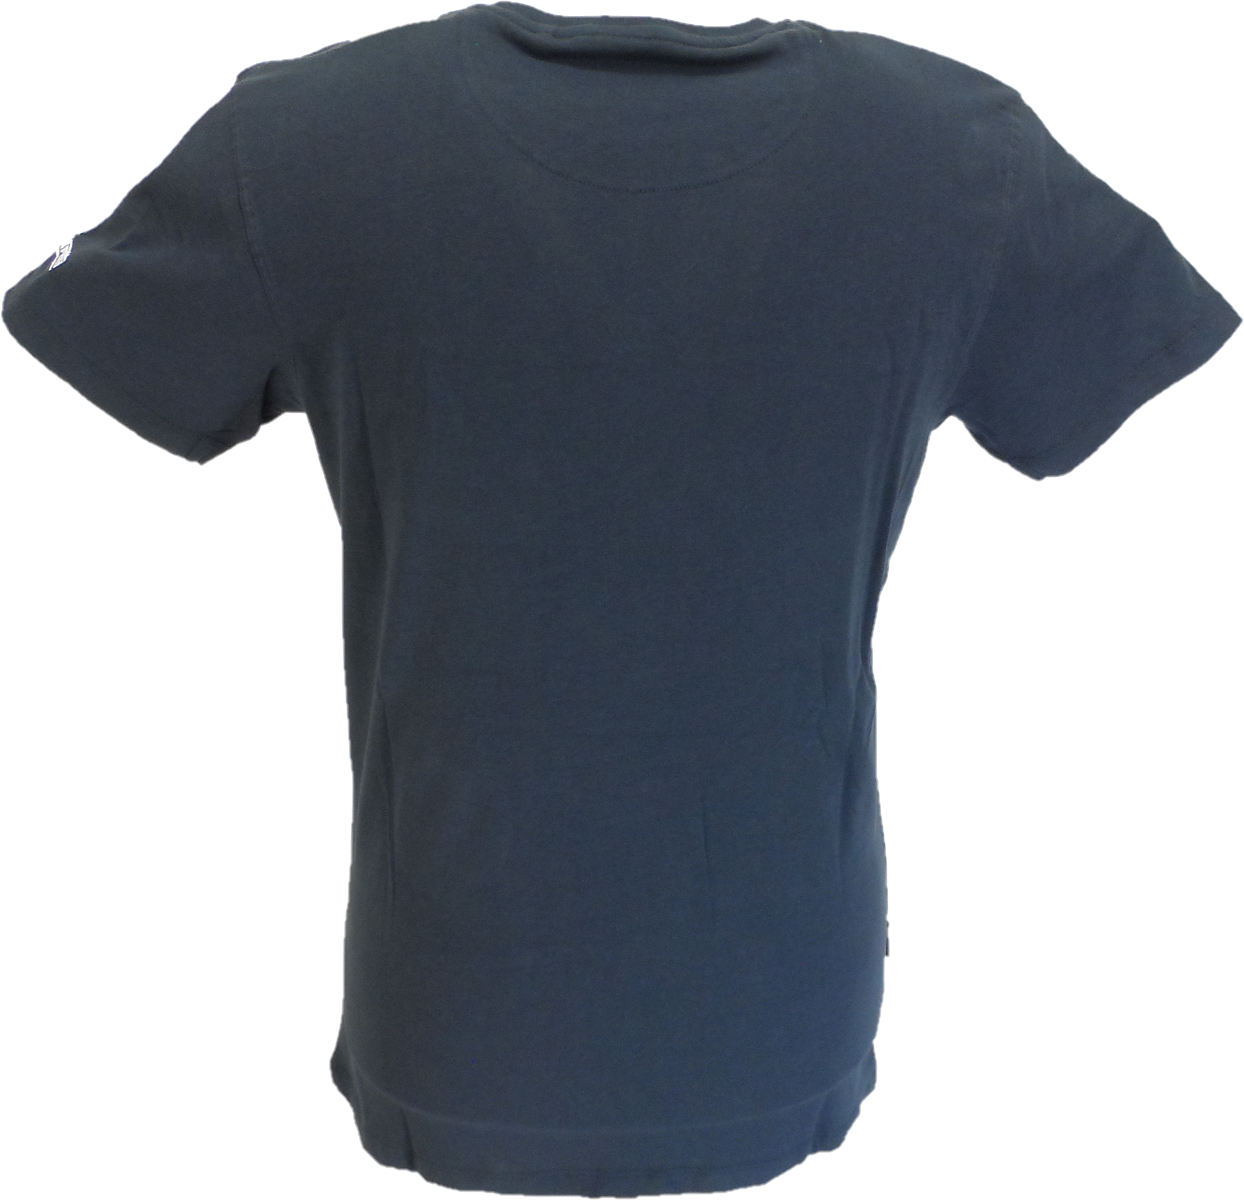 T-shirt rétro bleu marine pour homme Lambretta établi 1947